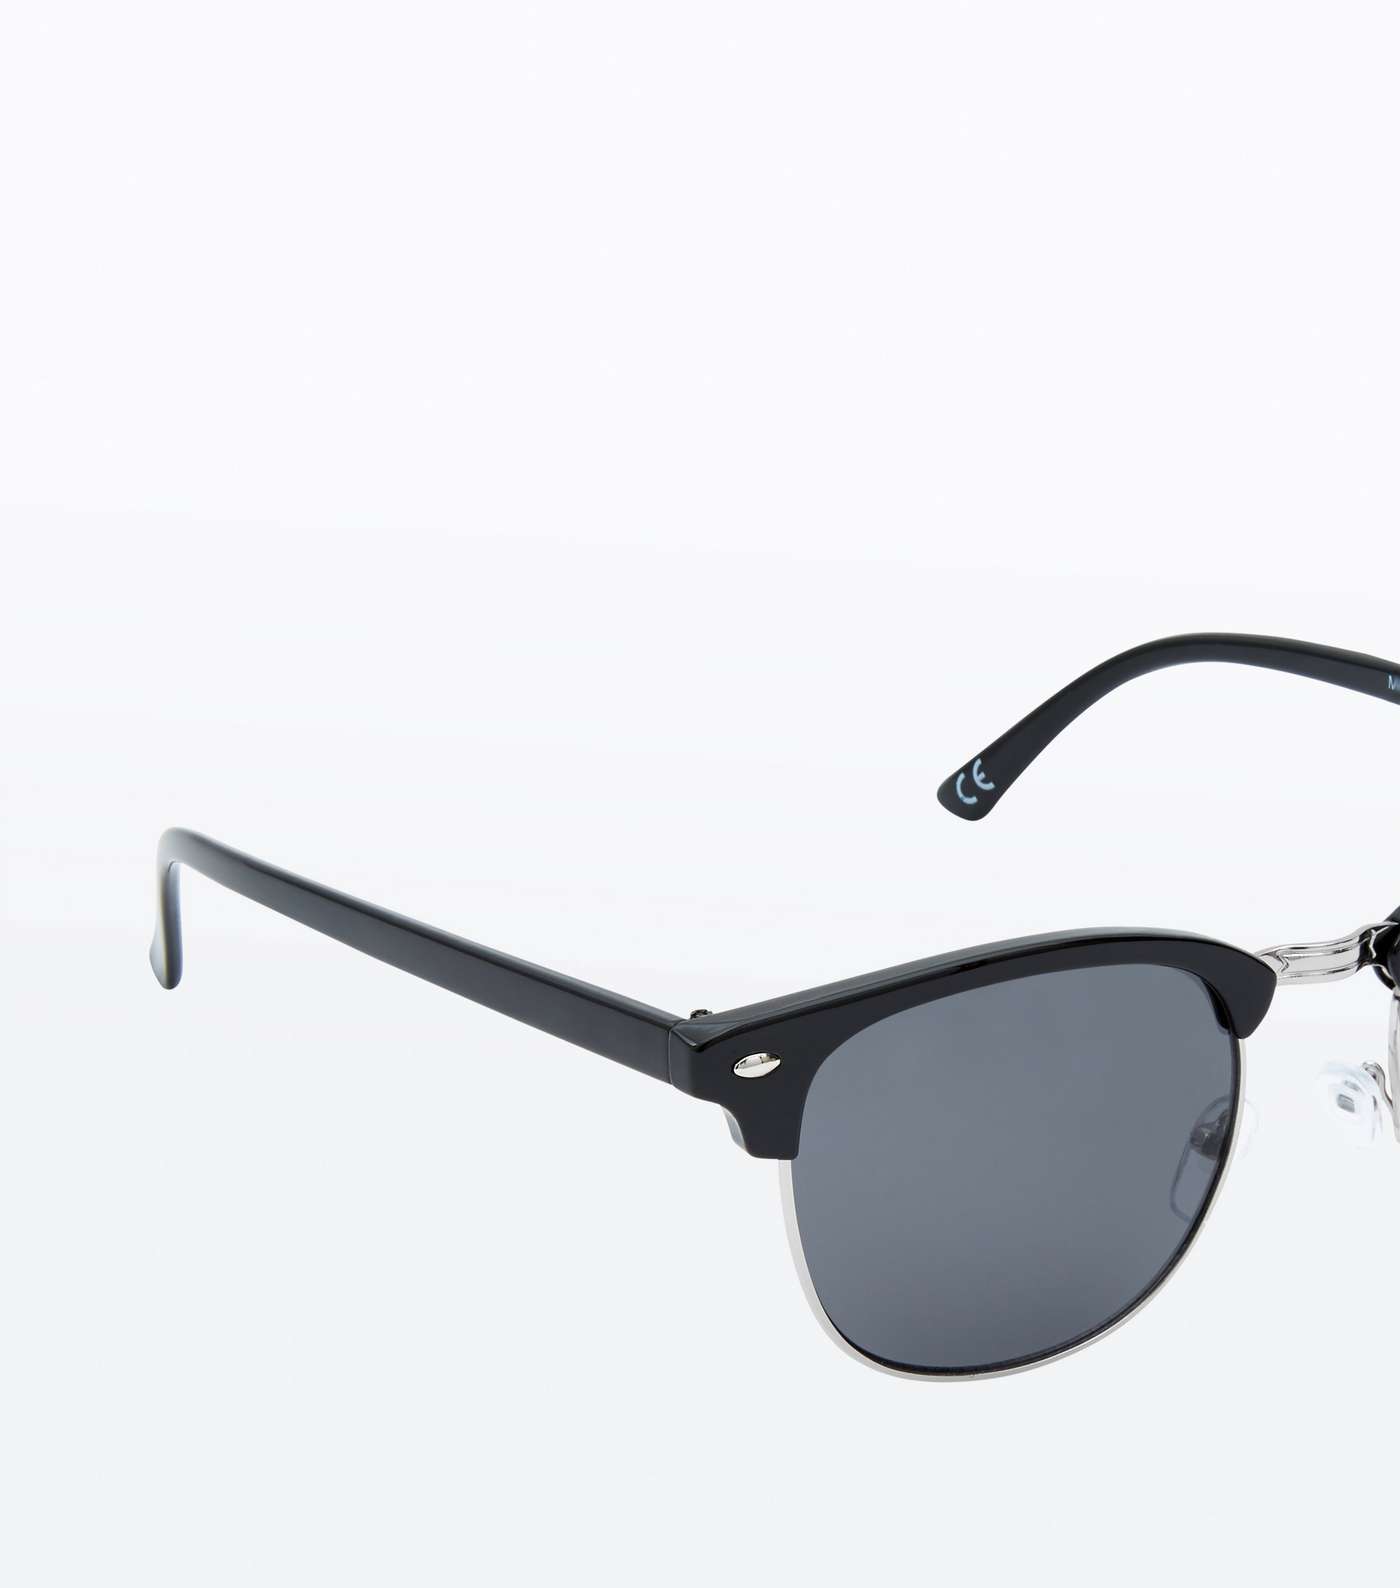 Black Smoke Tinted Lens Sunglasses Image 4